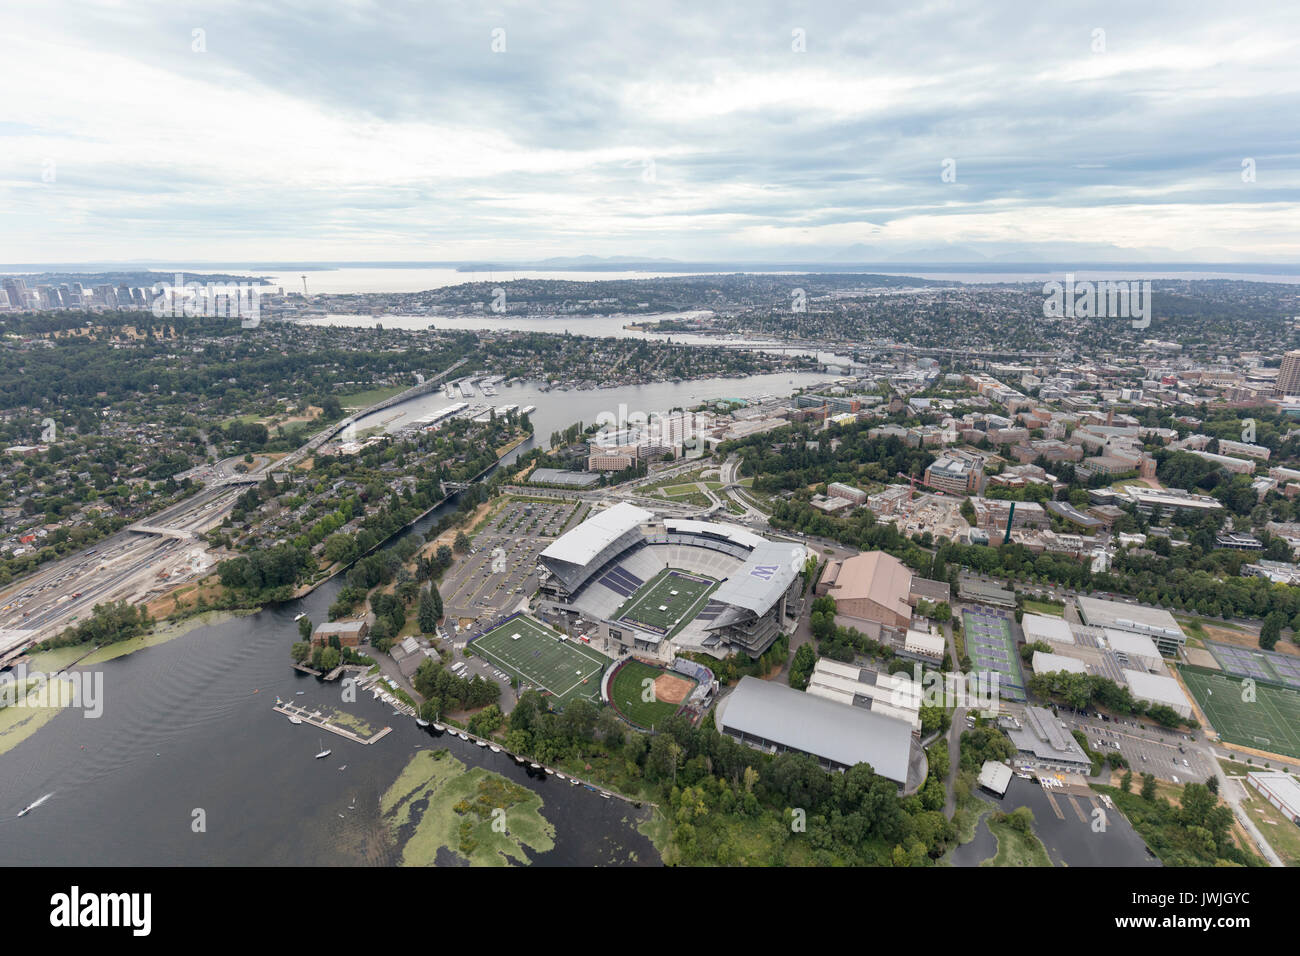 aerial view of Husky Stadium with University of Washington in the background, Seattle, Washington State, USA Stock Photo